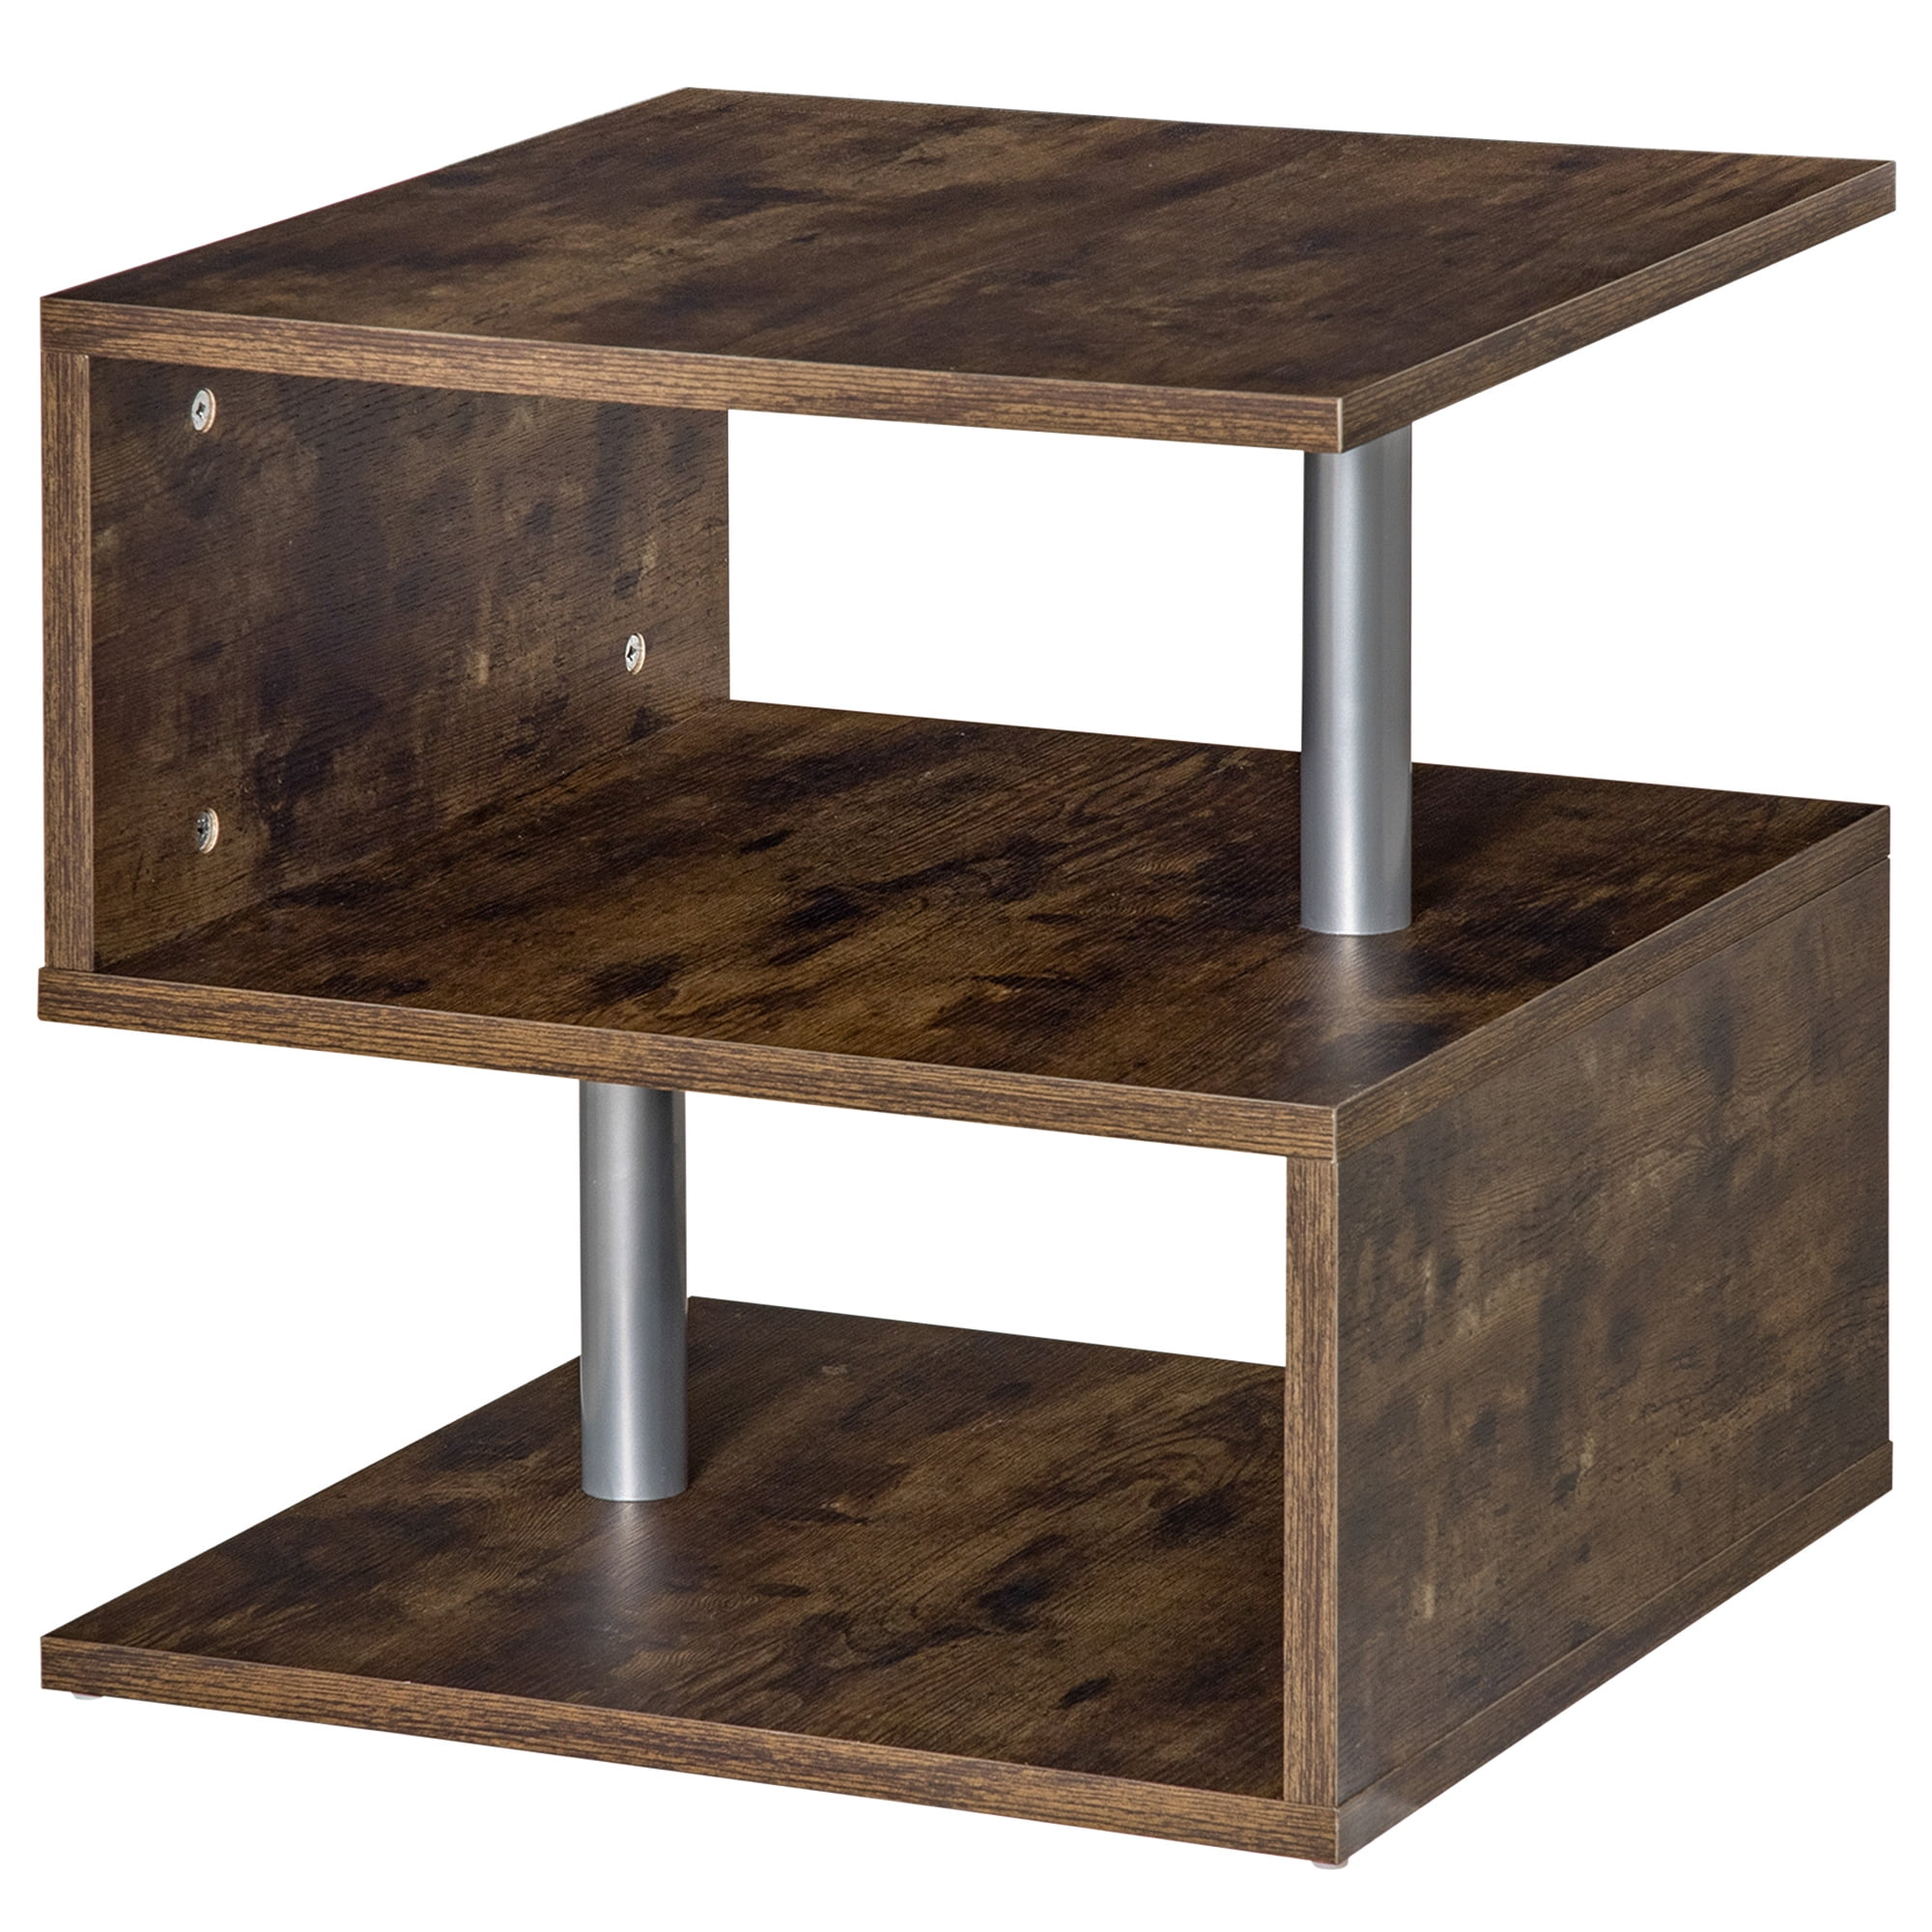 HOMCOM C Shape Side Table Marble-Effect Top Metal Frame Space-Saving Furniture 